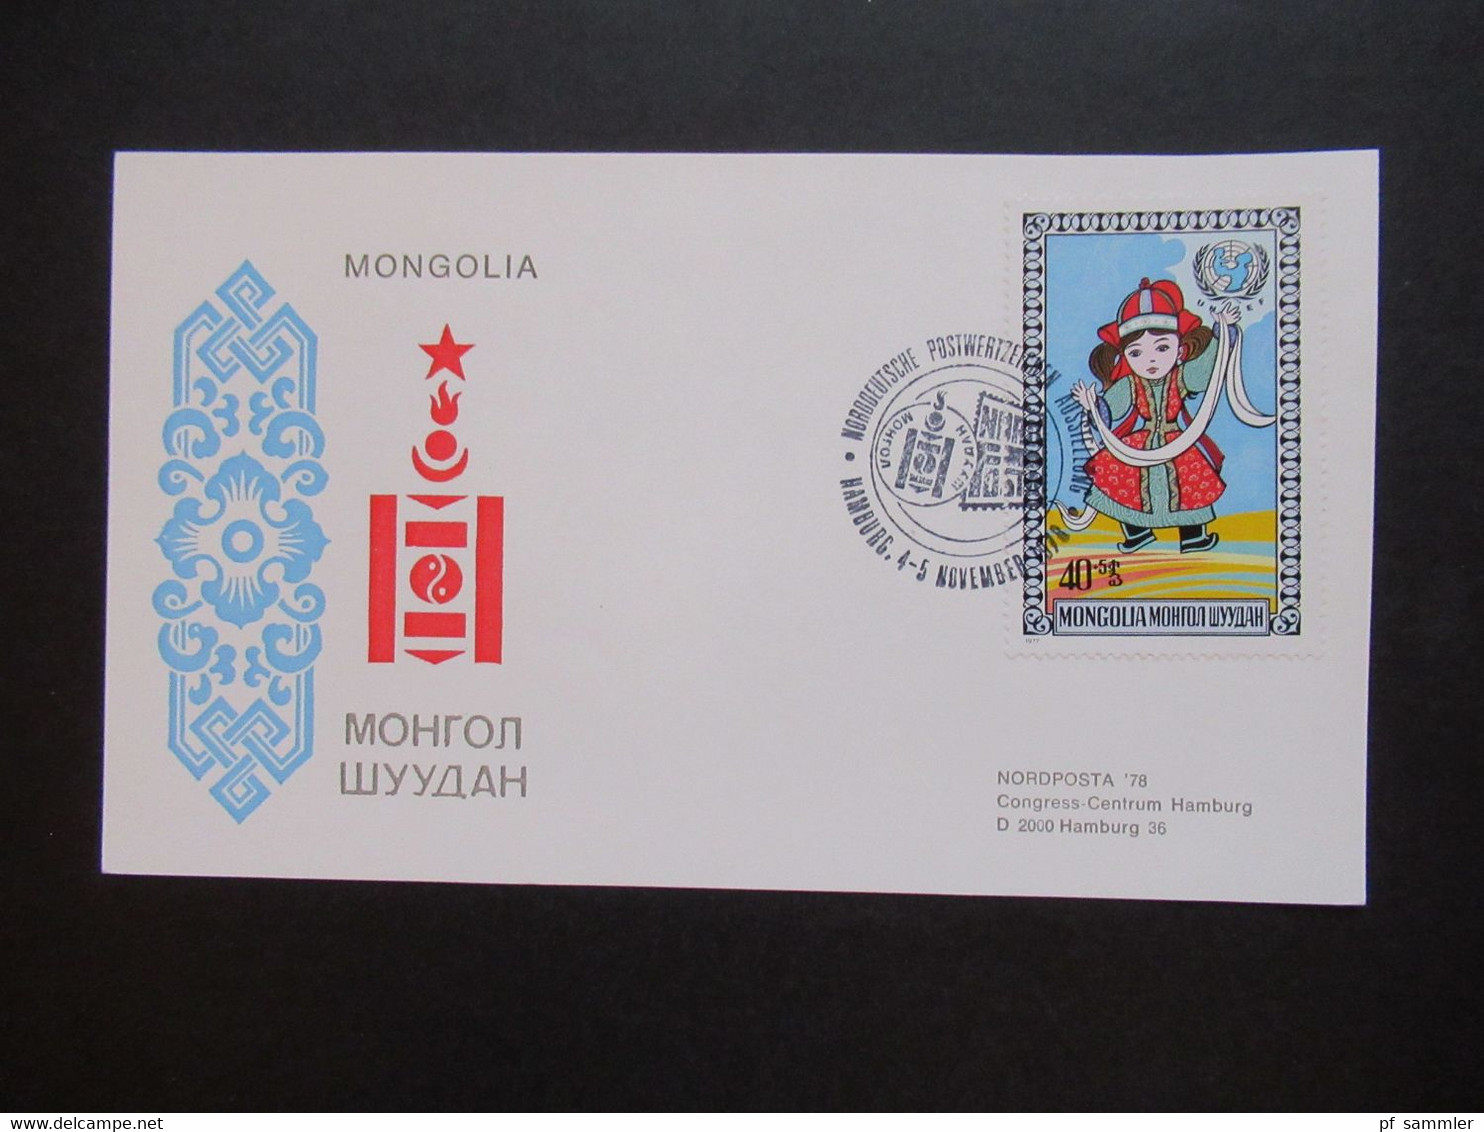 Asien Mongolei / Mongolia 1977 / 78 Sonderkarten 7 Stk. Sonderstempel Postwertzeichen Ausstellung Nordposta - Mongolia